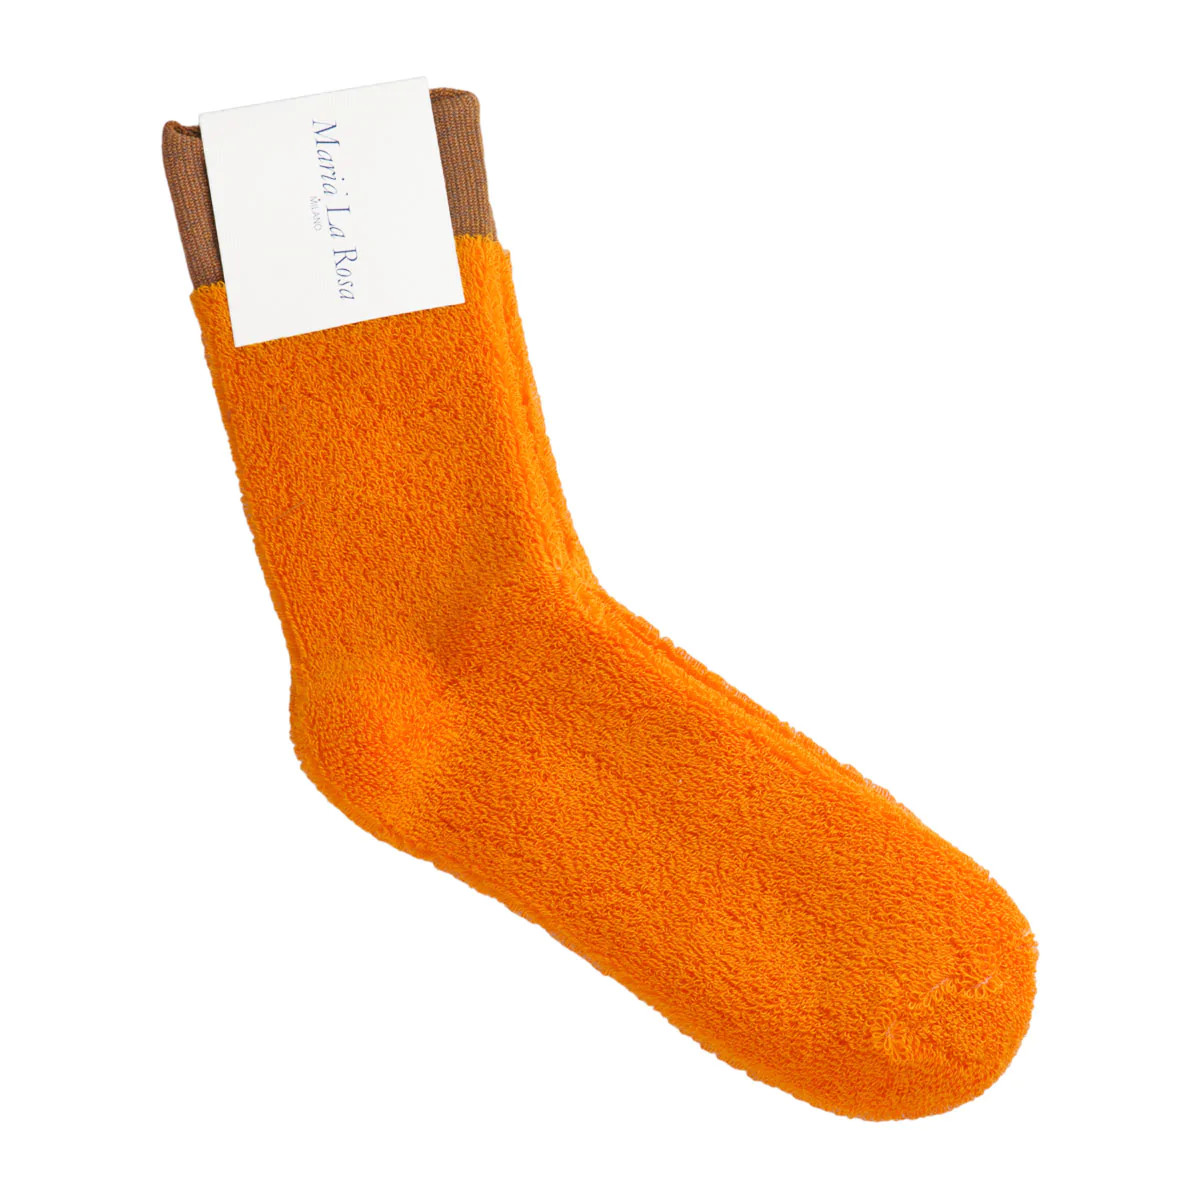 Maria La Rosa: Cosy Socks Orange and Brown, tomfoolery